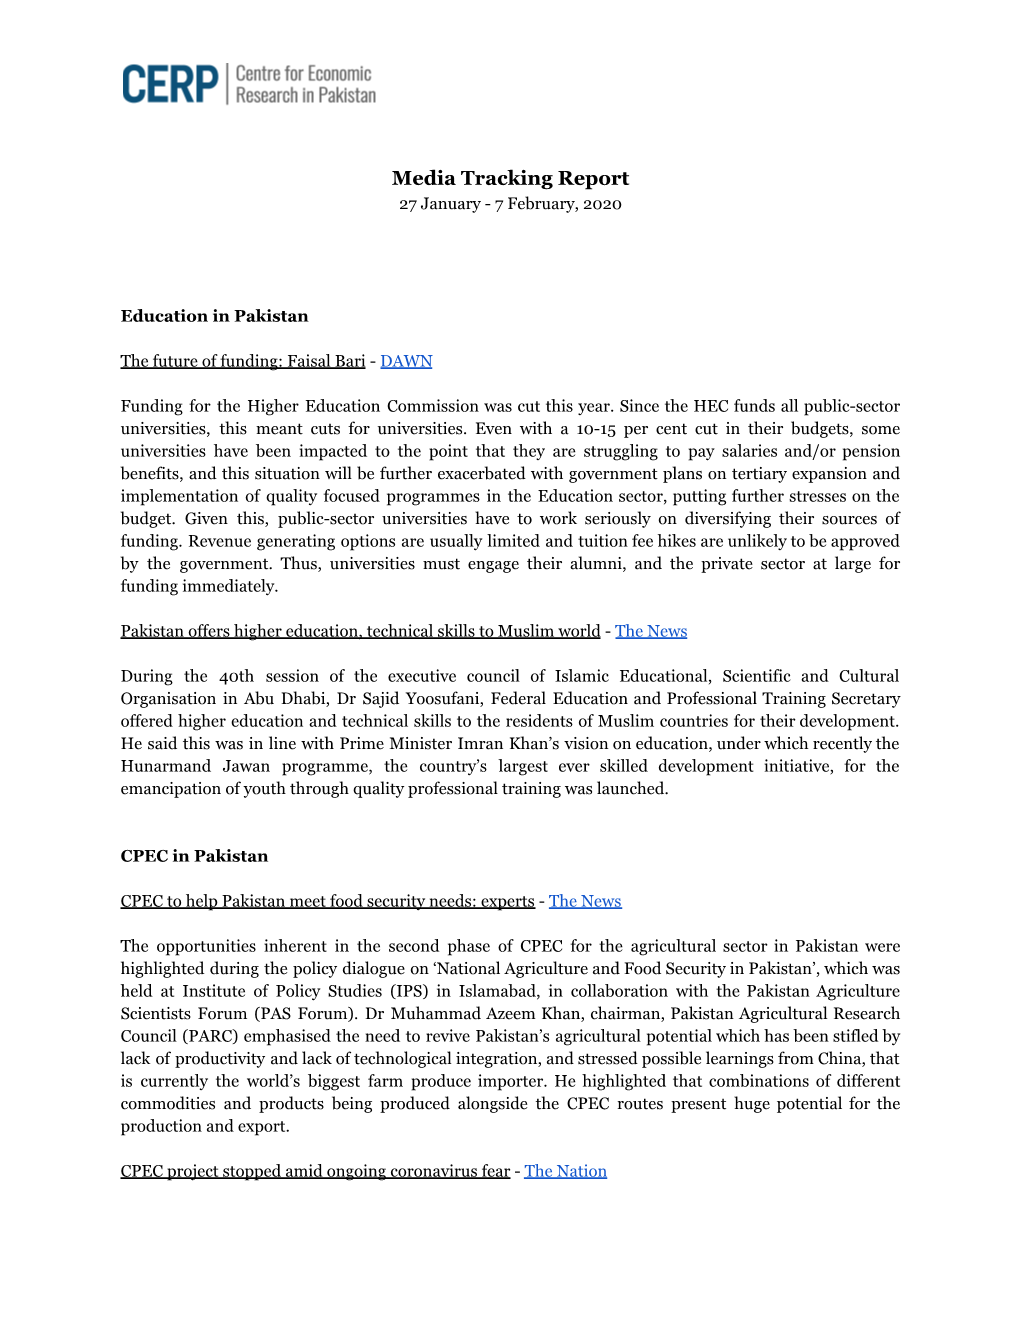 Media Tracking Report 27 January - 7 February, 2020